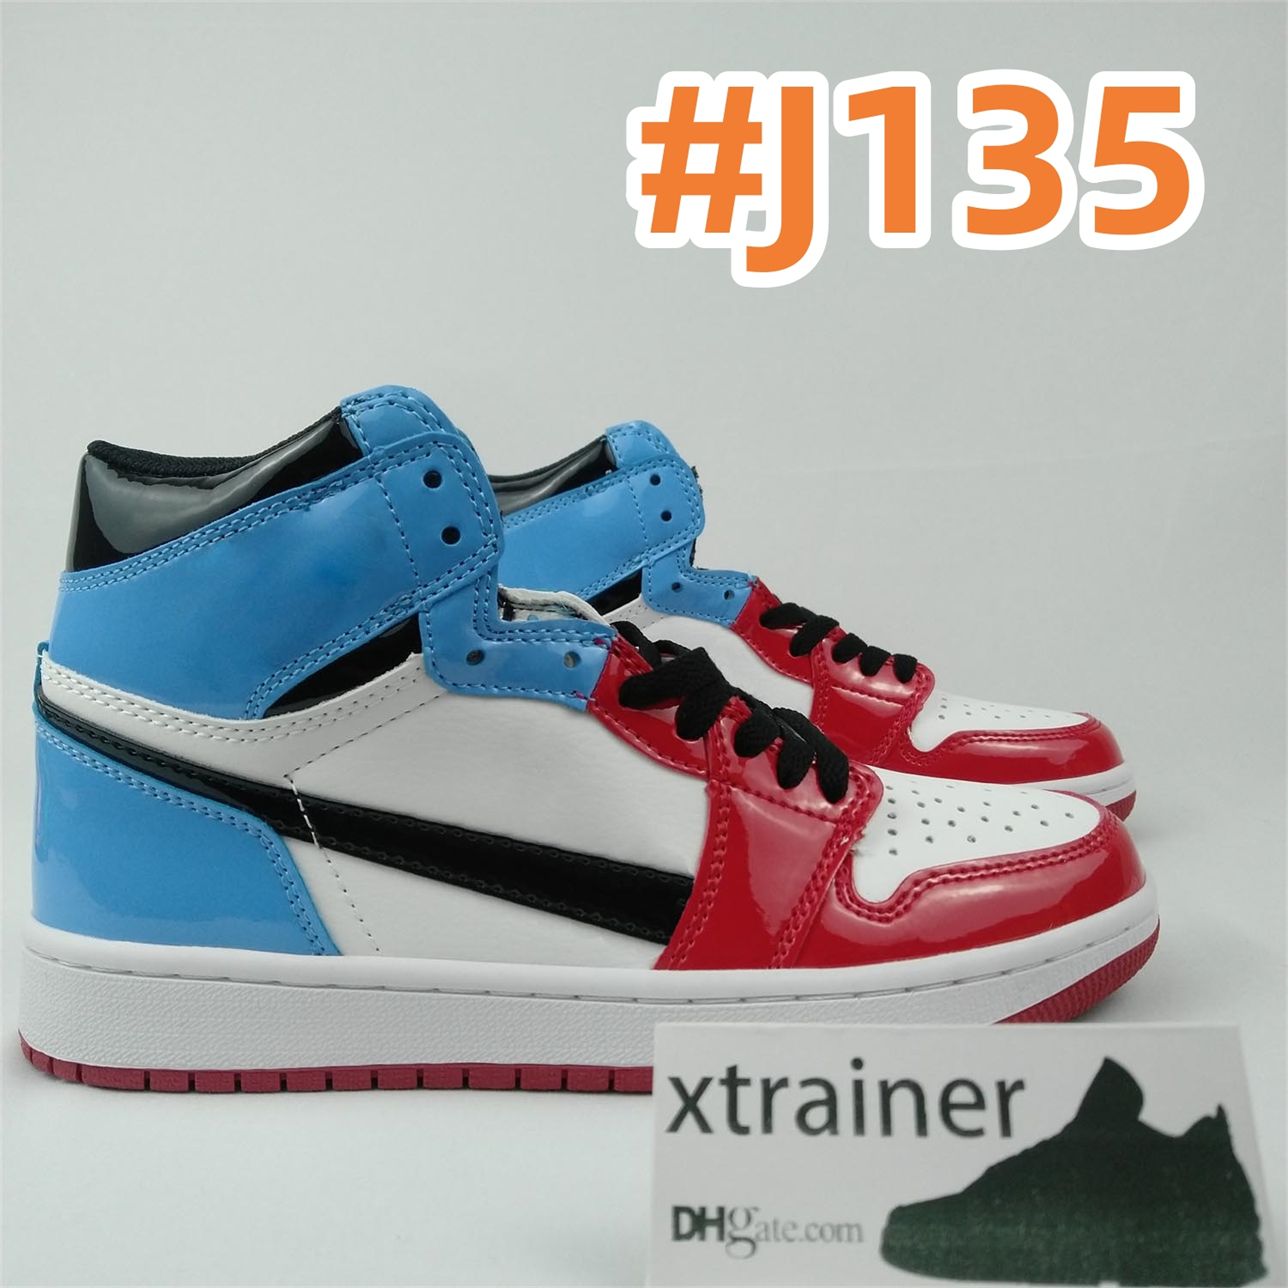 #J135